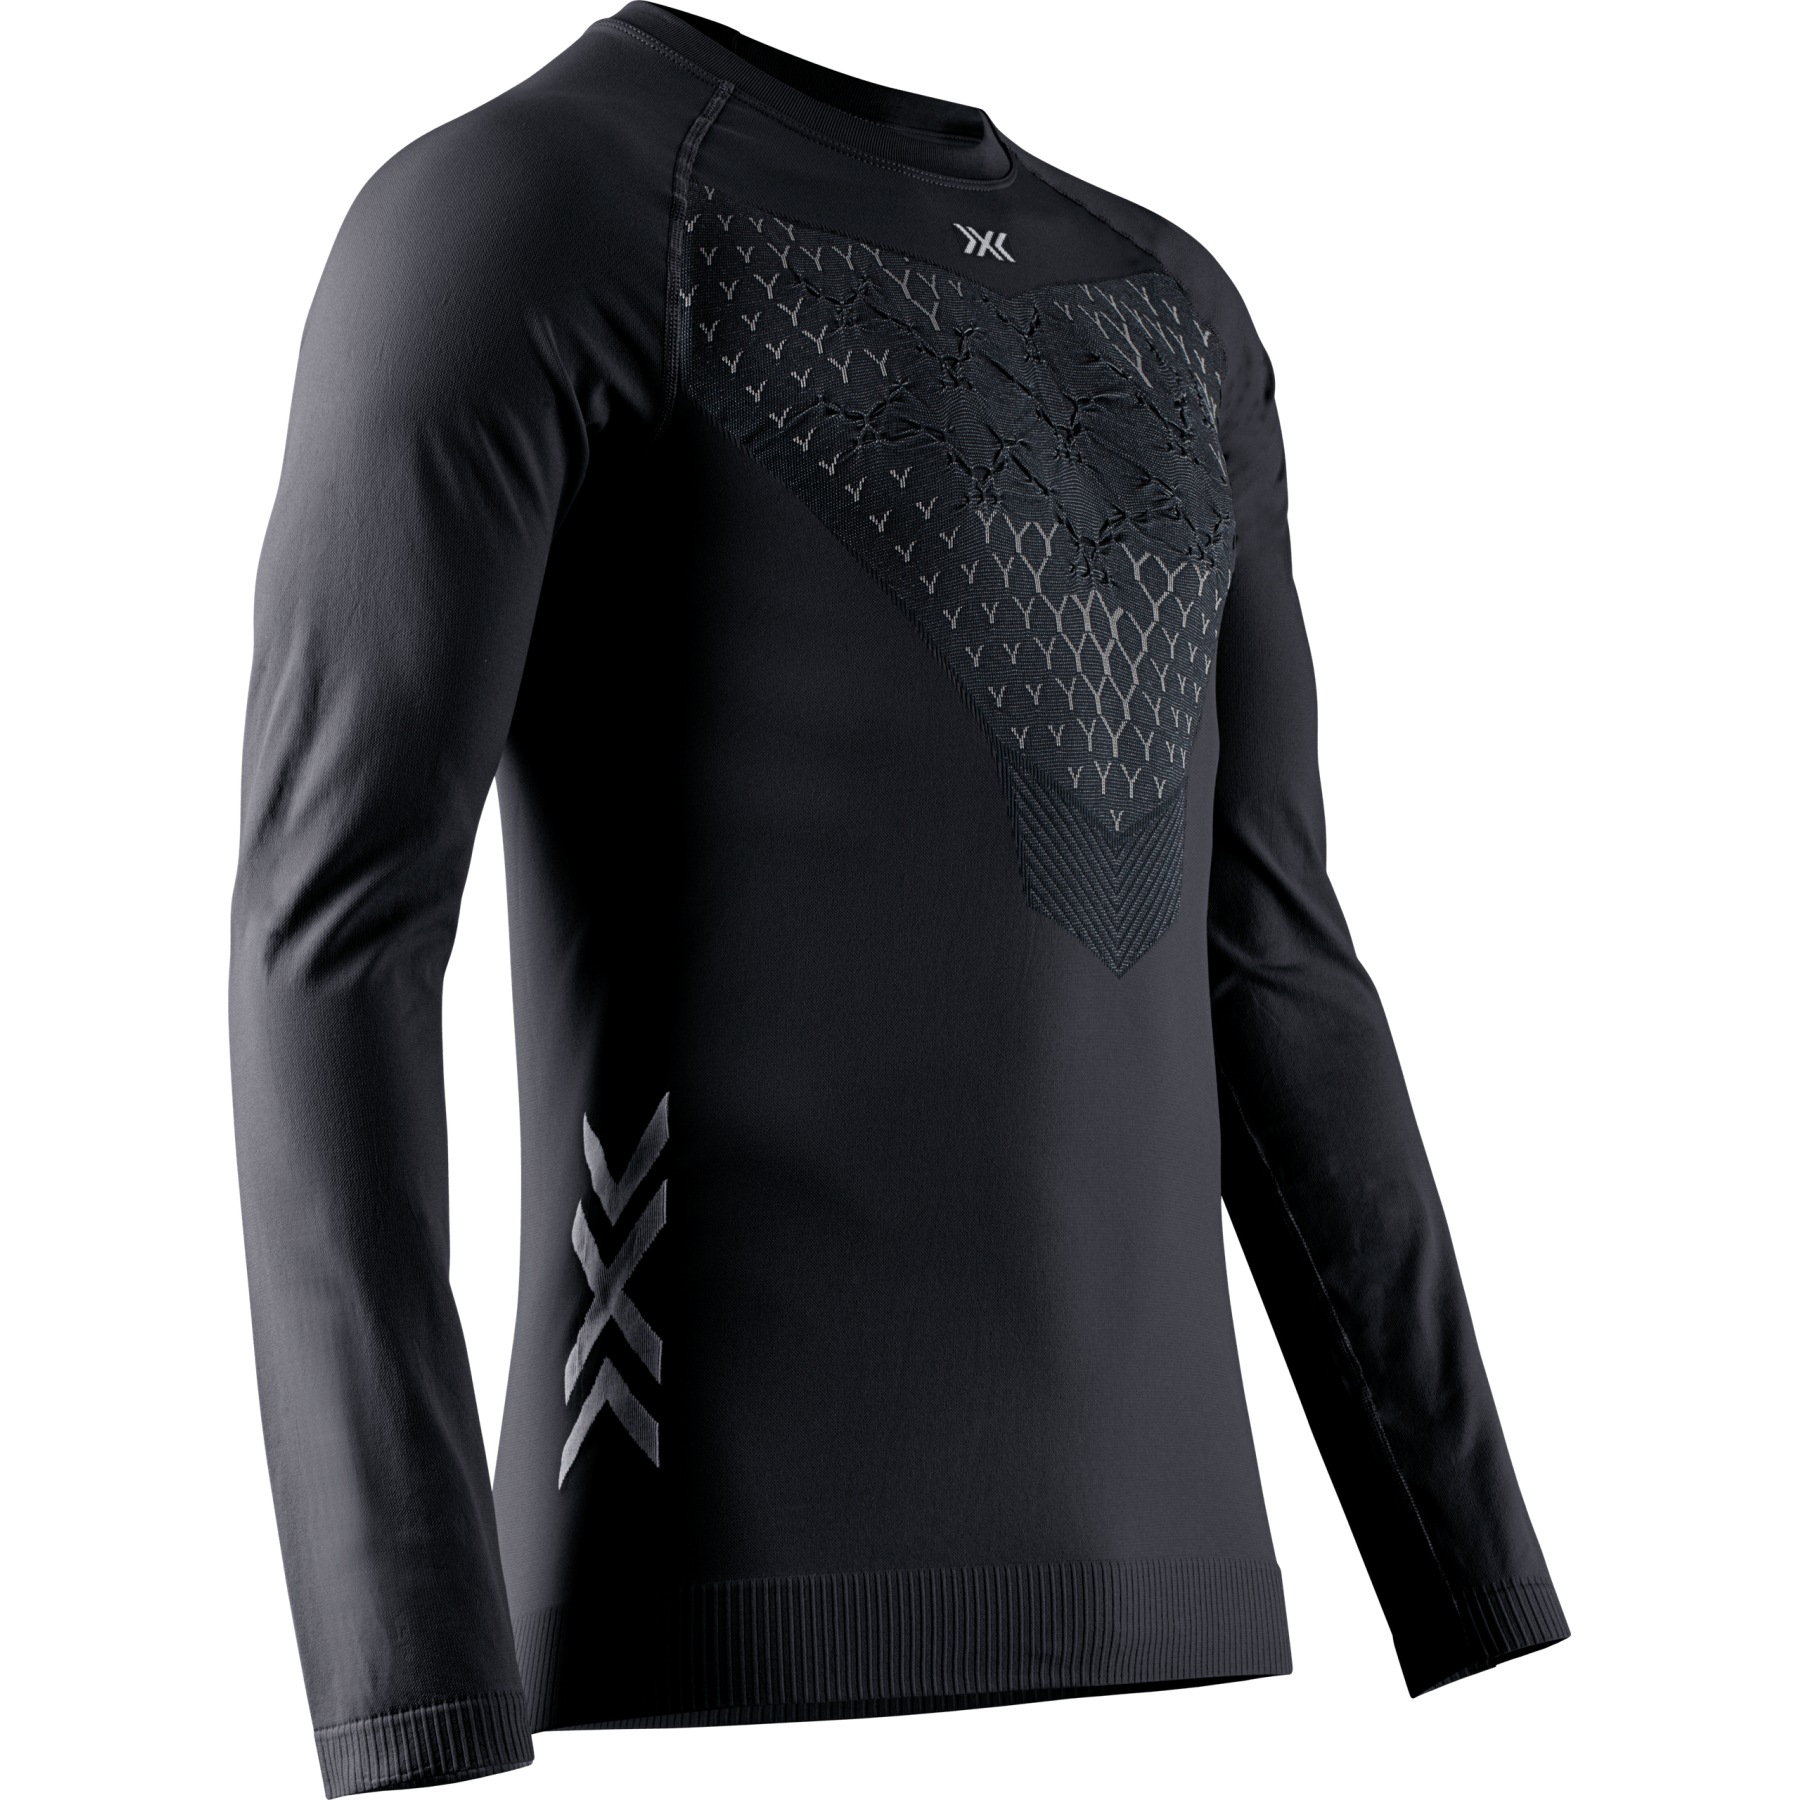 Picture of X-Bionic Twyce Run Long Sleeve Shirt Men - black/charcoal